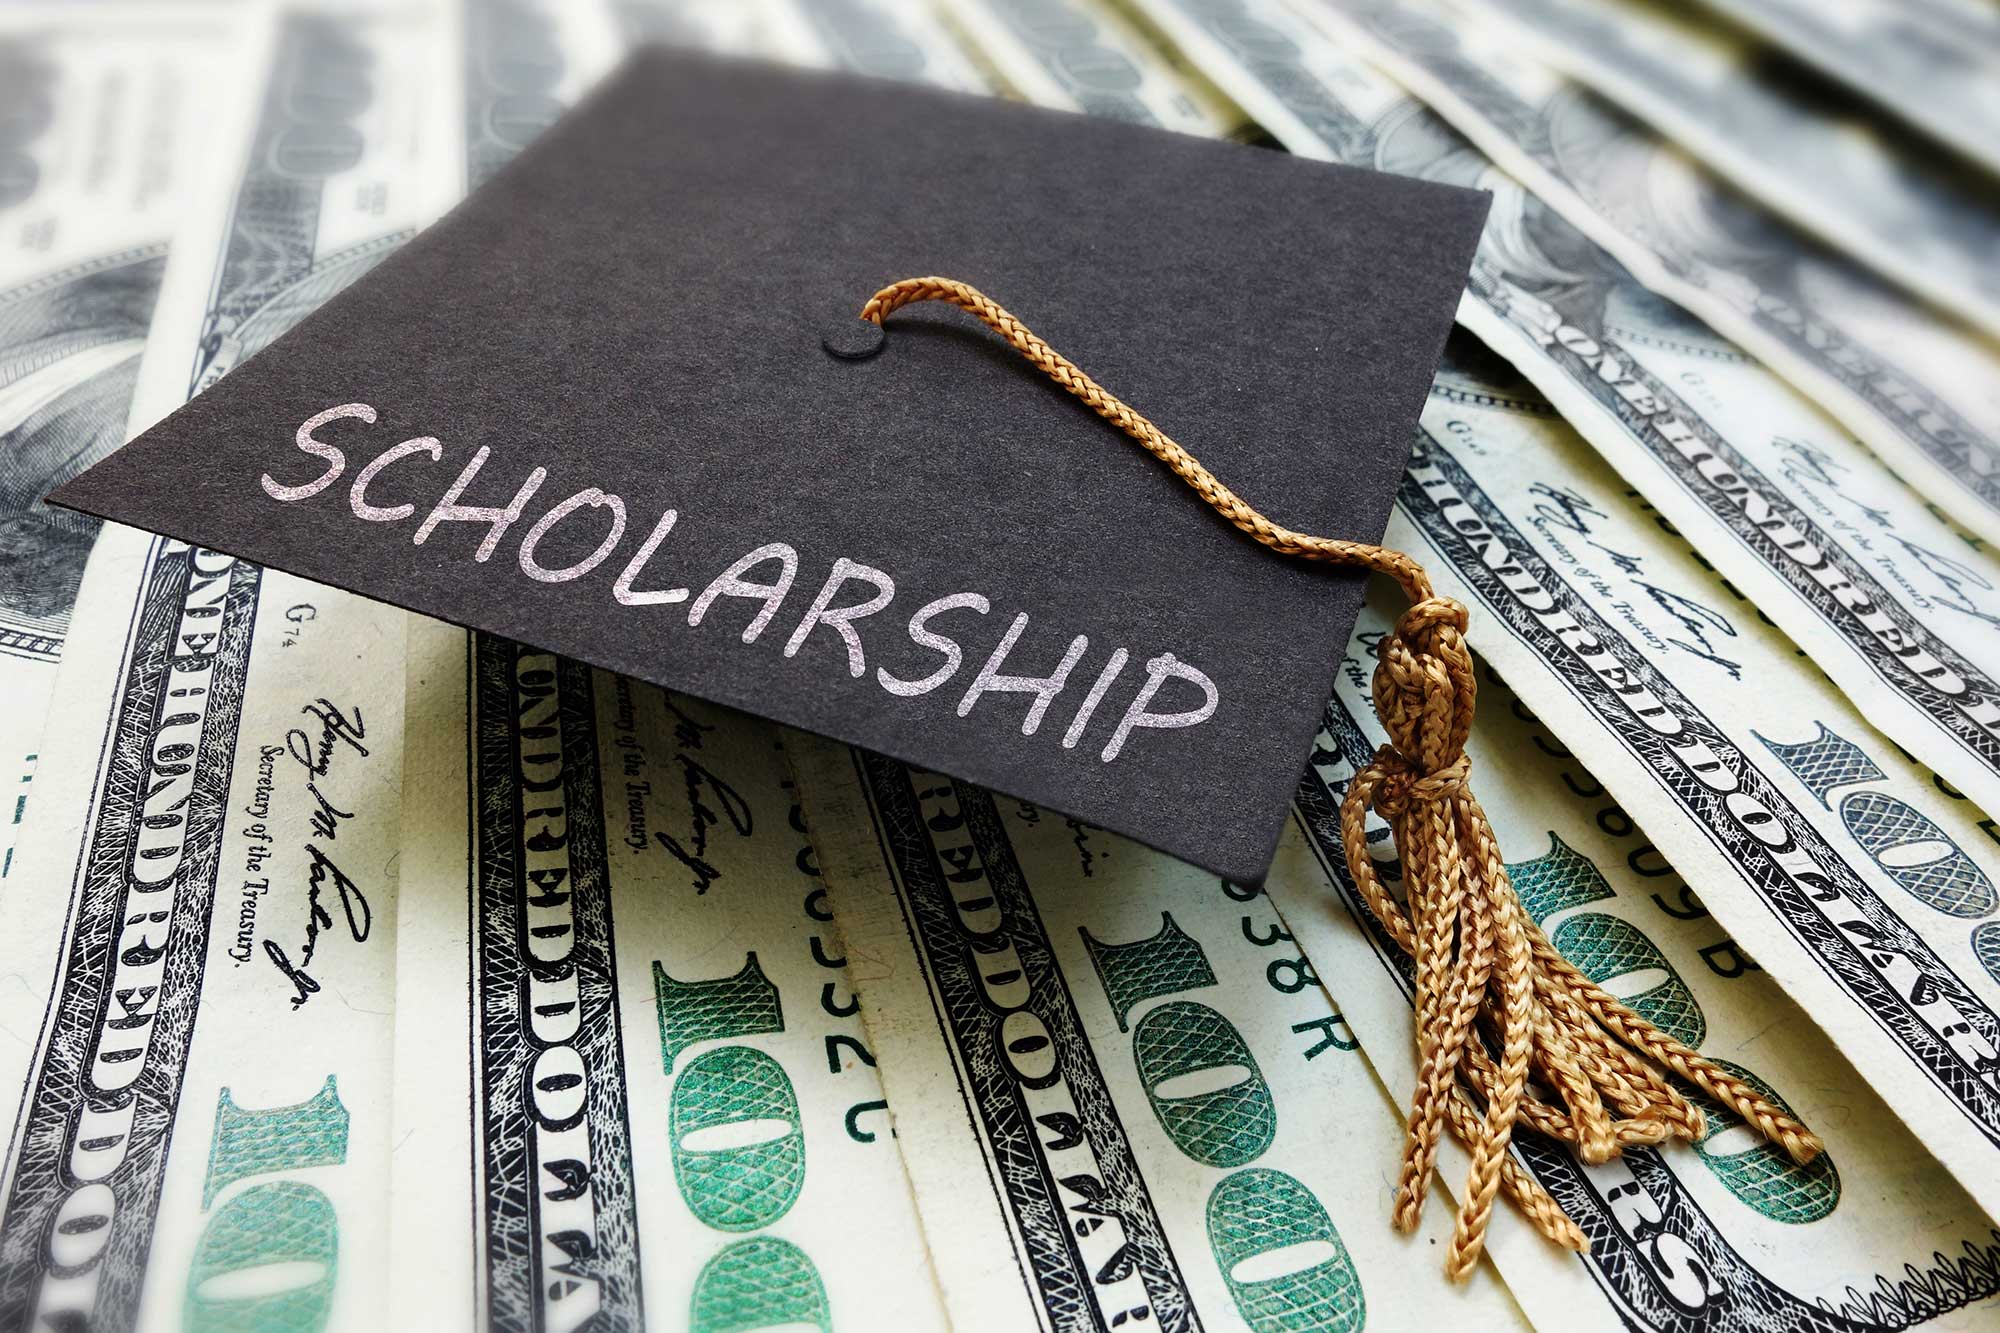 Graduate admission essay help scholarship